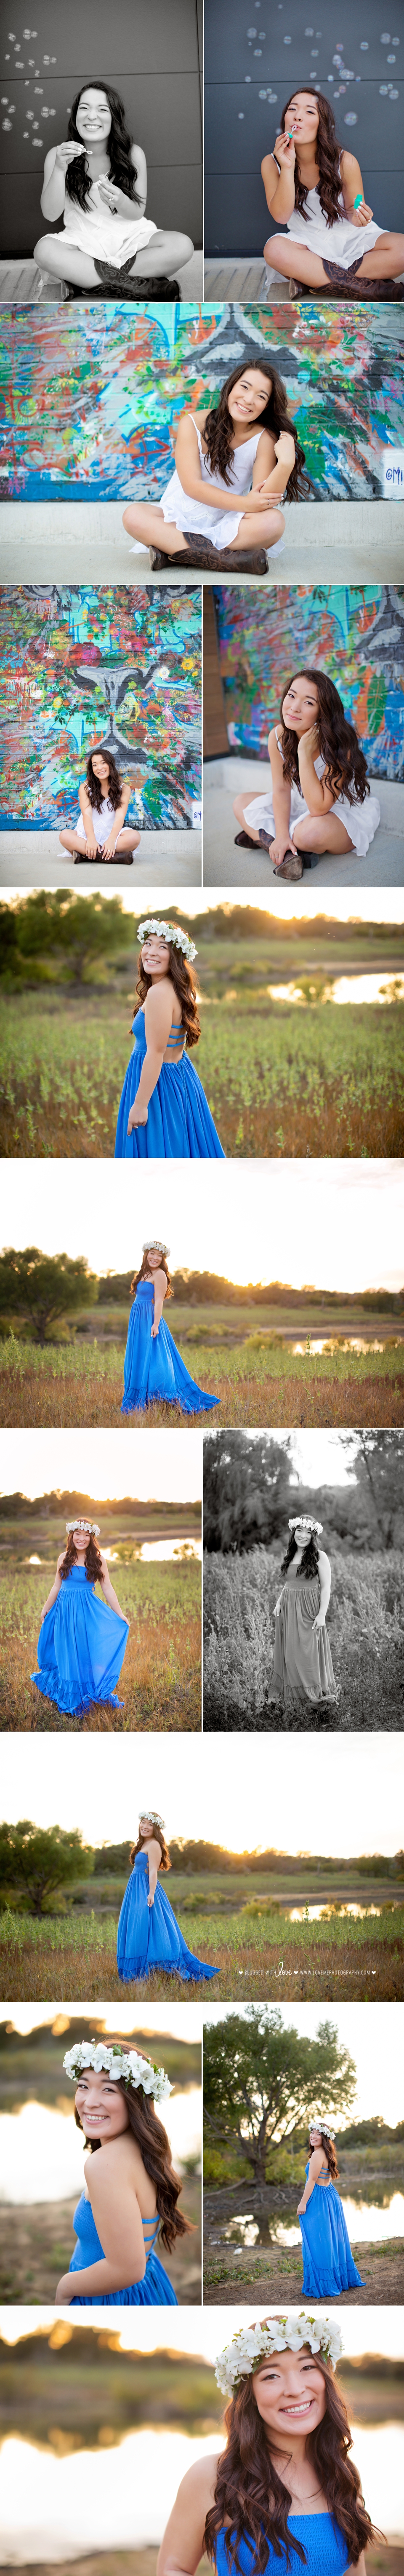 Senior photography photos of girl in blue dress